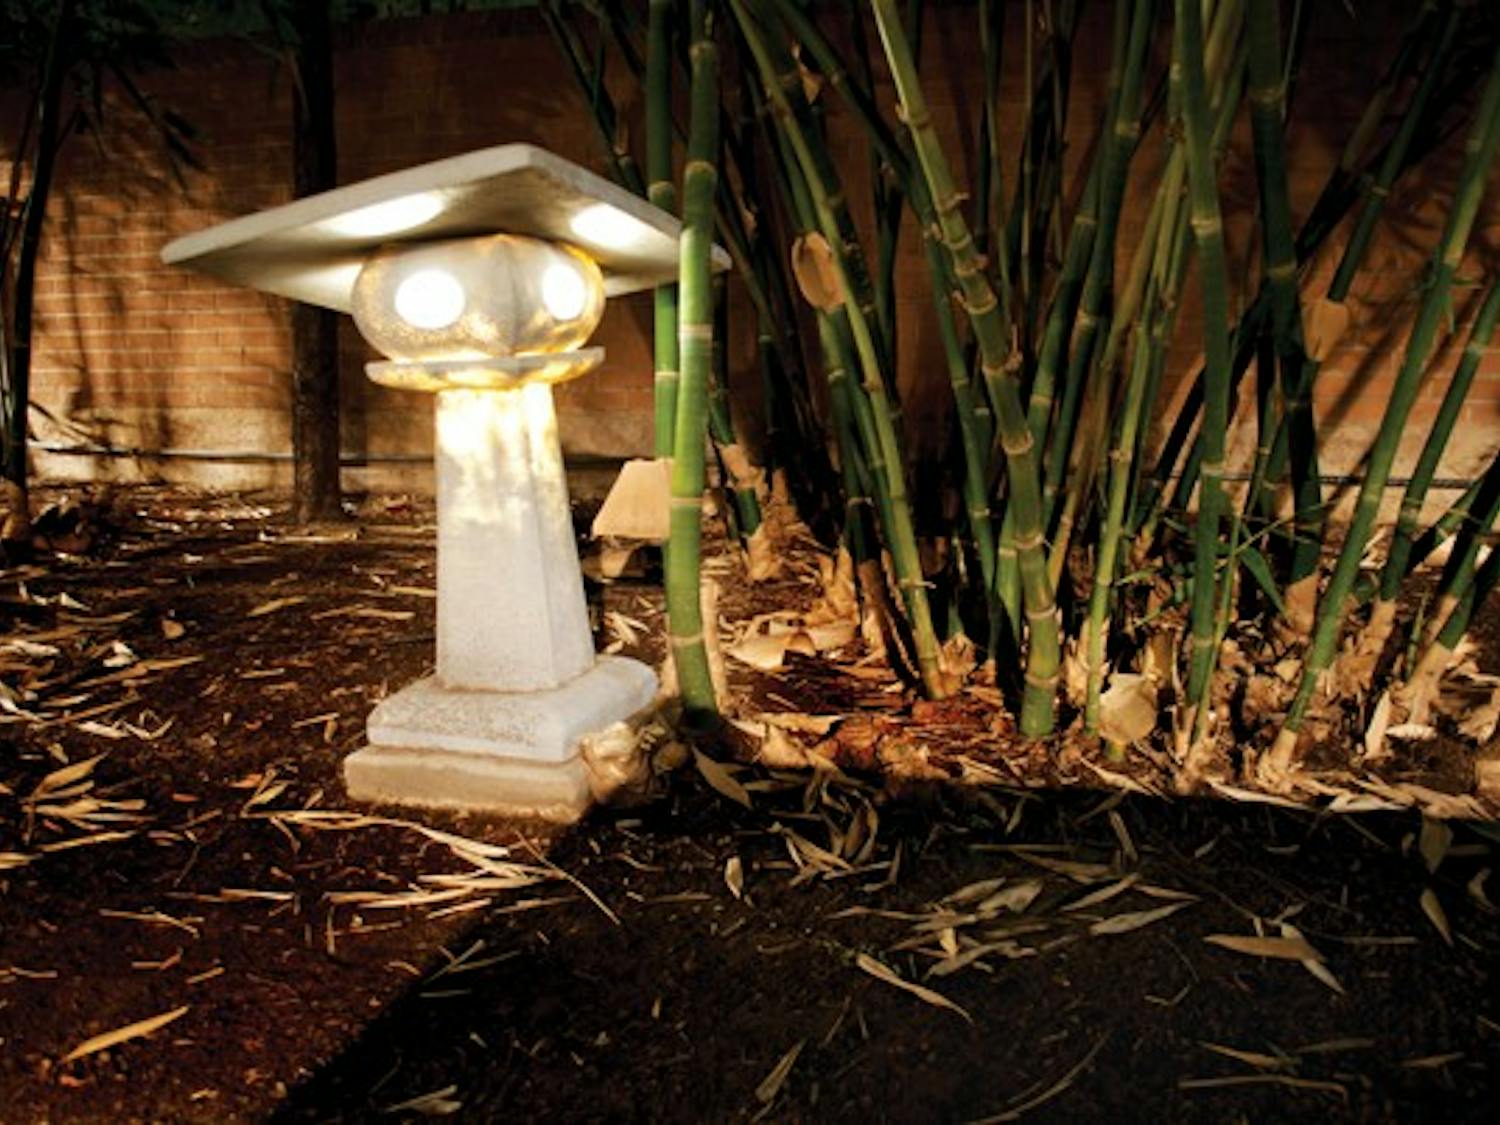 A light illuminates a bamboo garden on the Tempe campus at night. (Photo by Kurtis Semph)